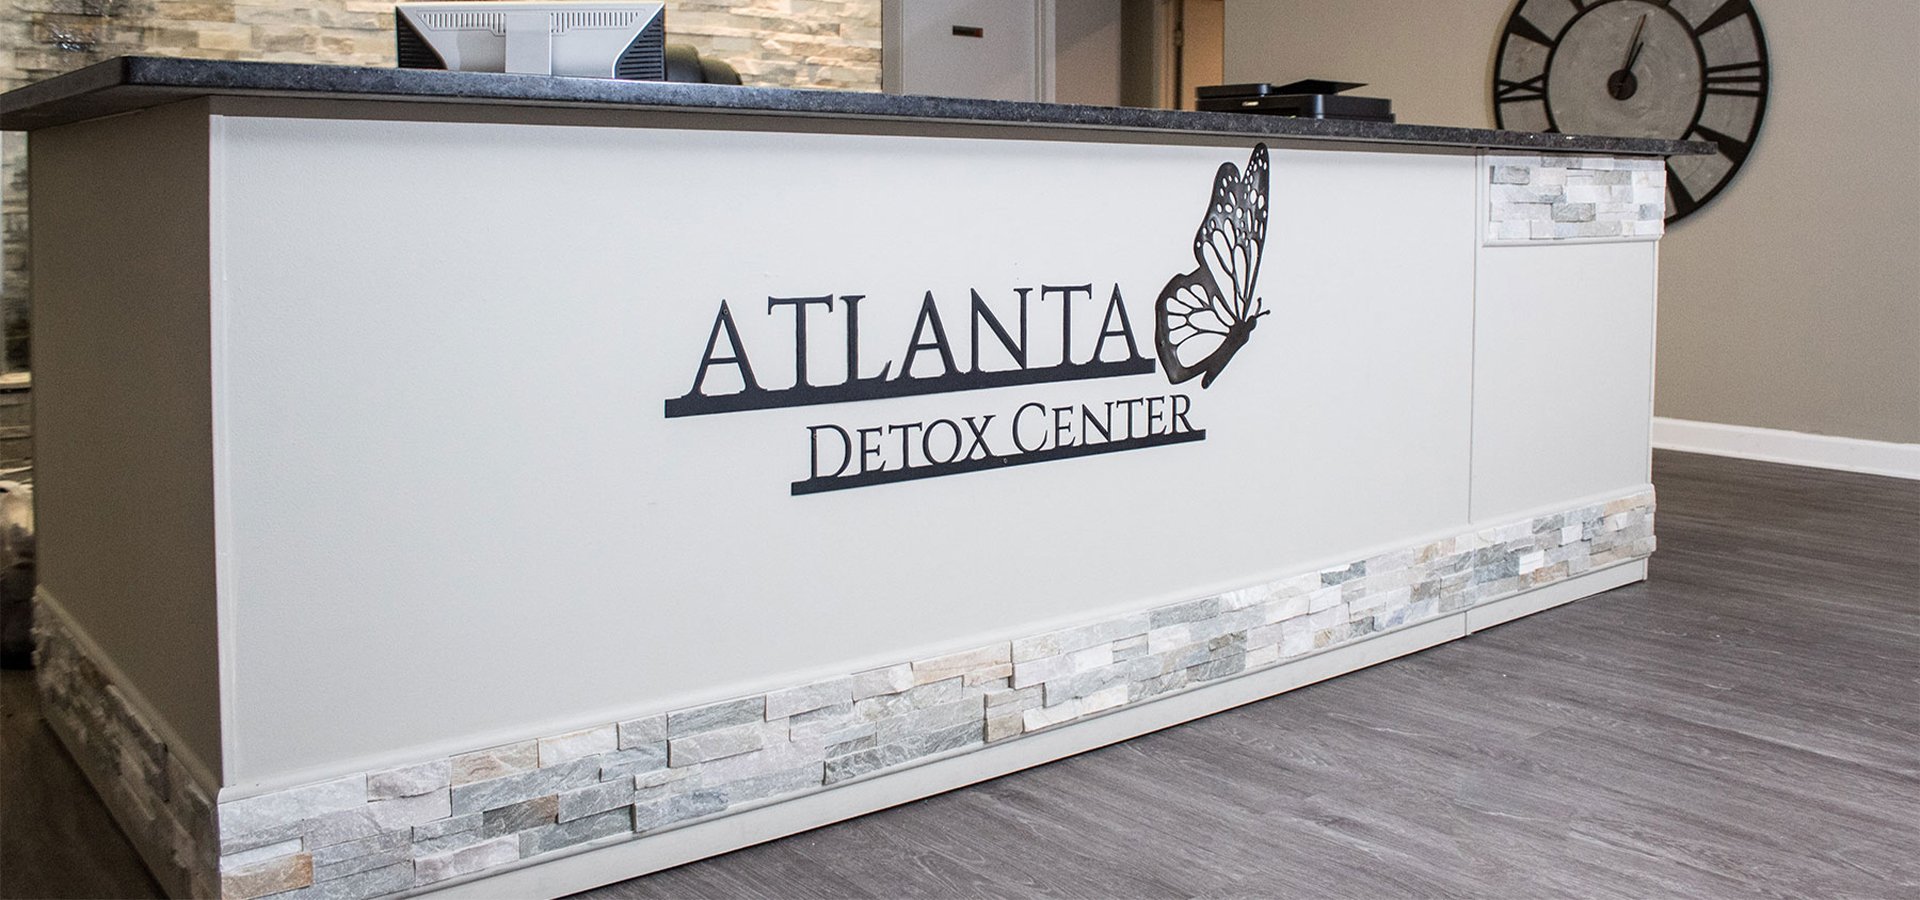 atlanta detox center front desk after amatus health opens atlanta detox center